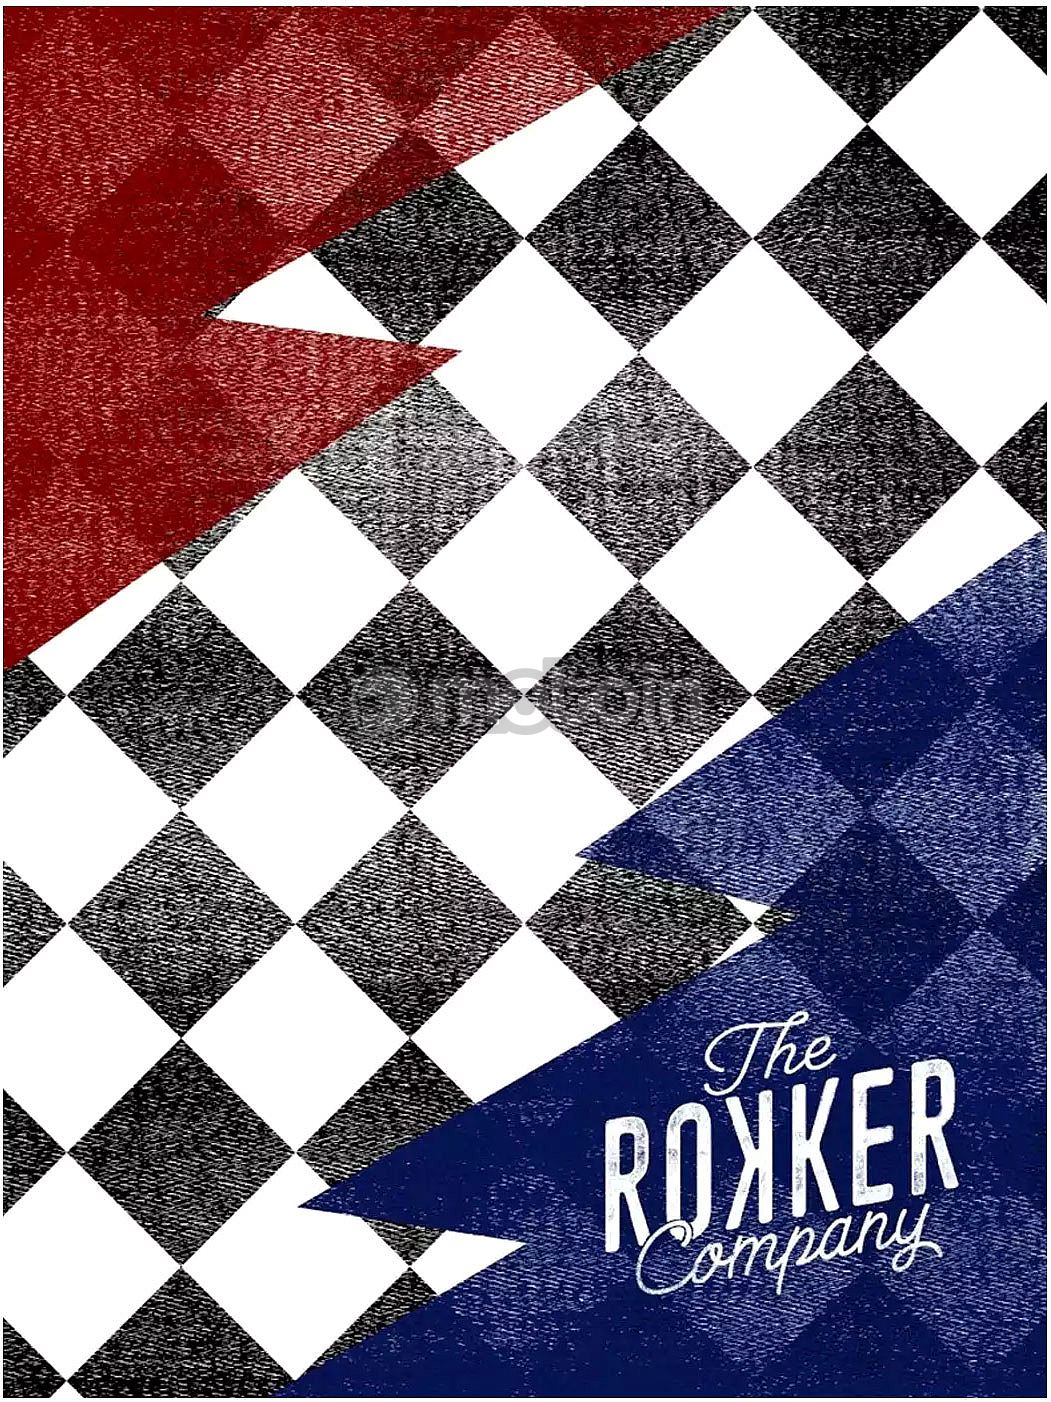 Rokker Checker Board Flash, wielofunkcyjne nakrycie głowy